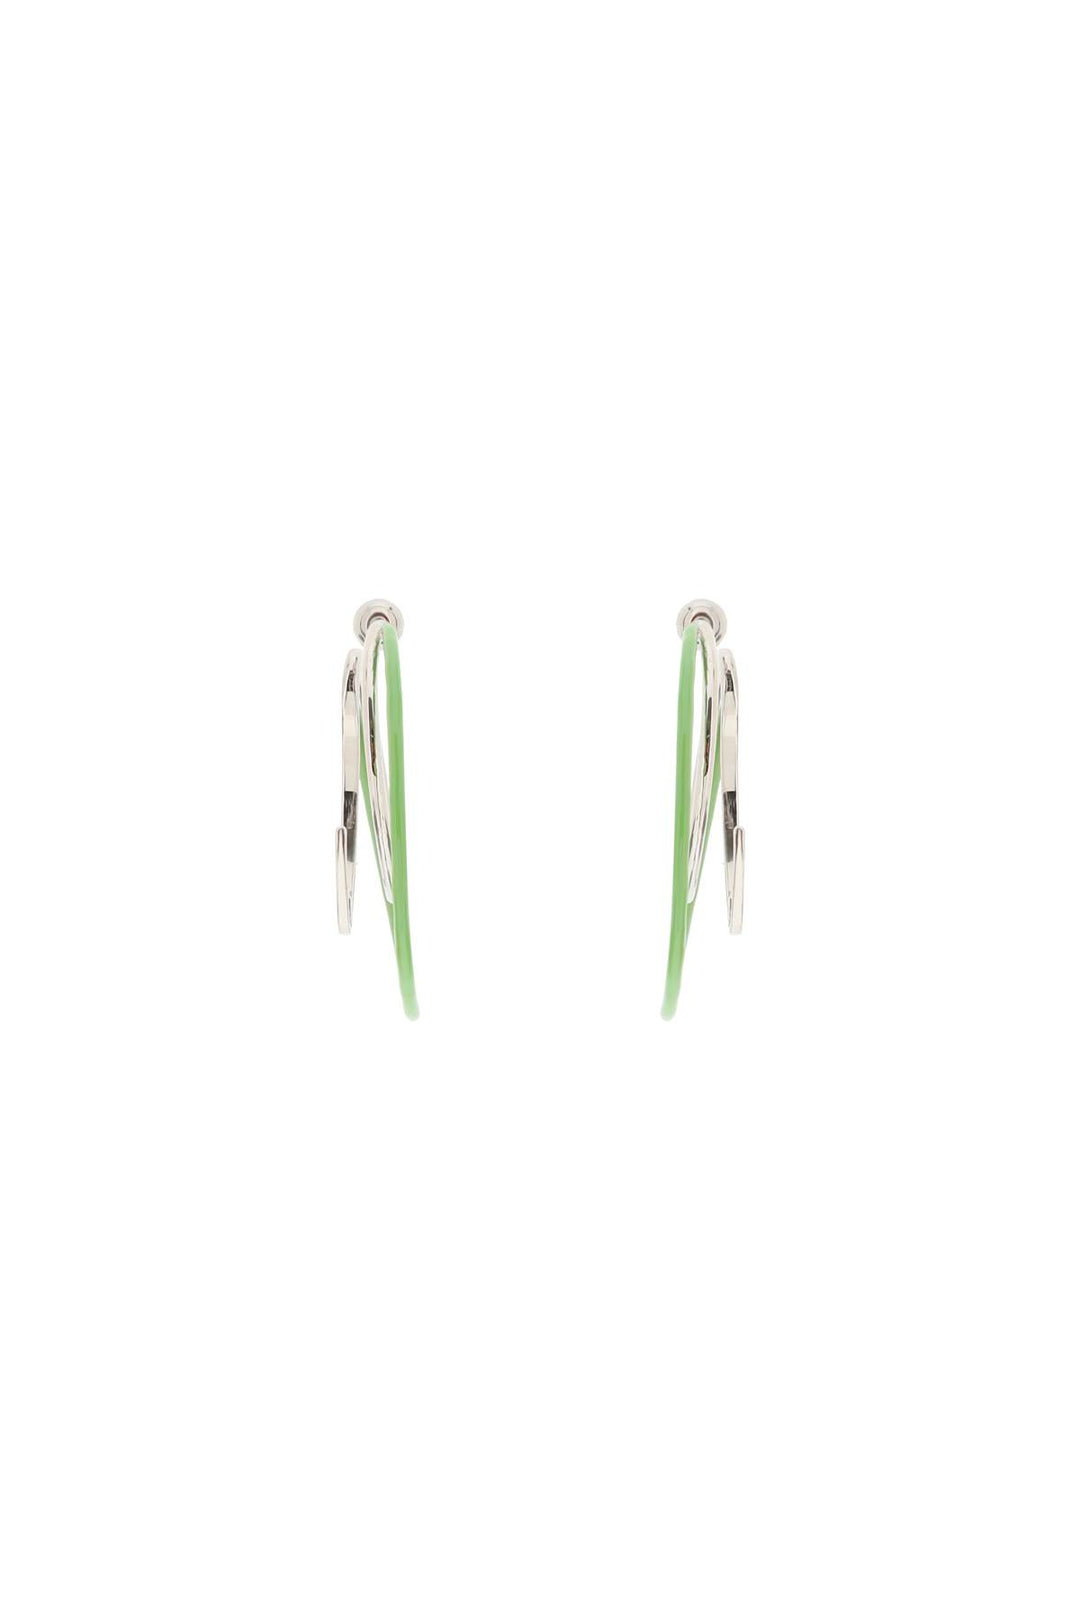 Panconesi 'Double Kilter' Earrings   Verde